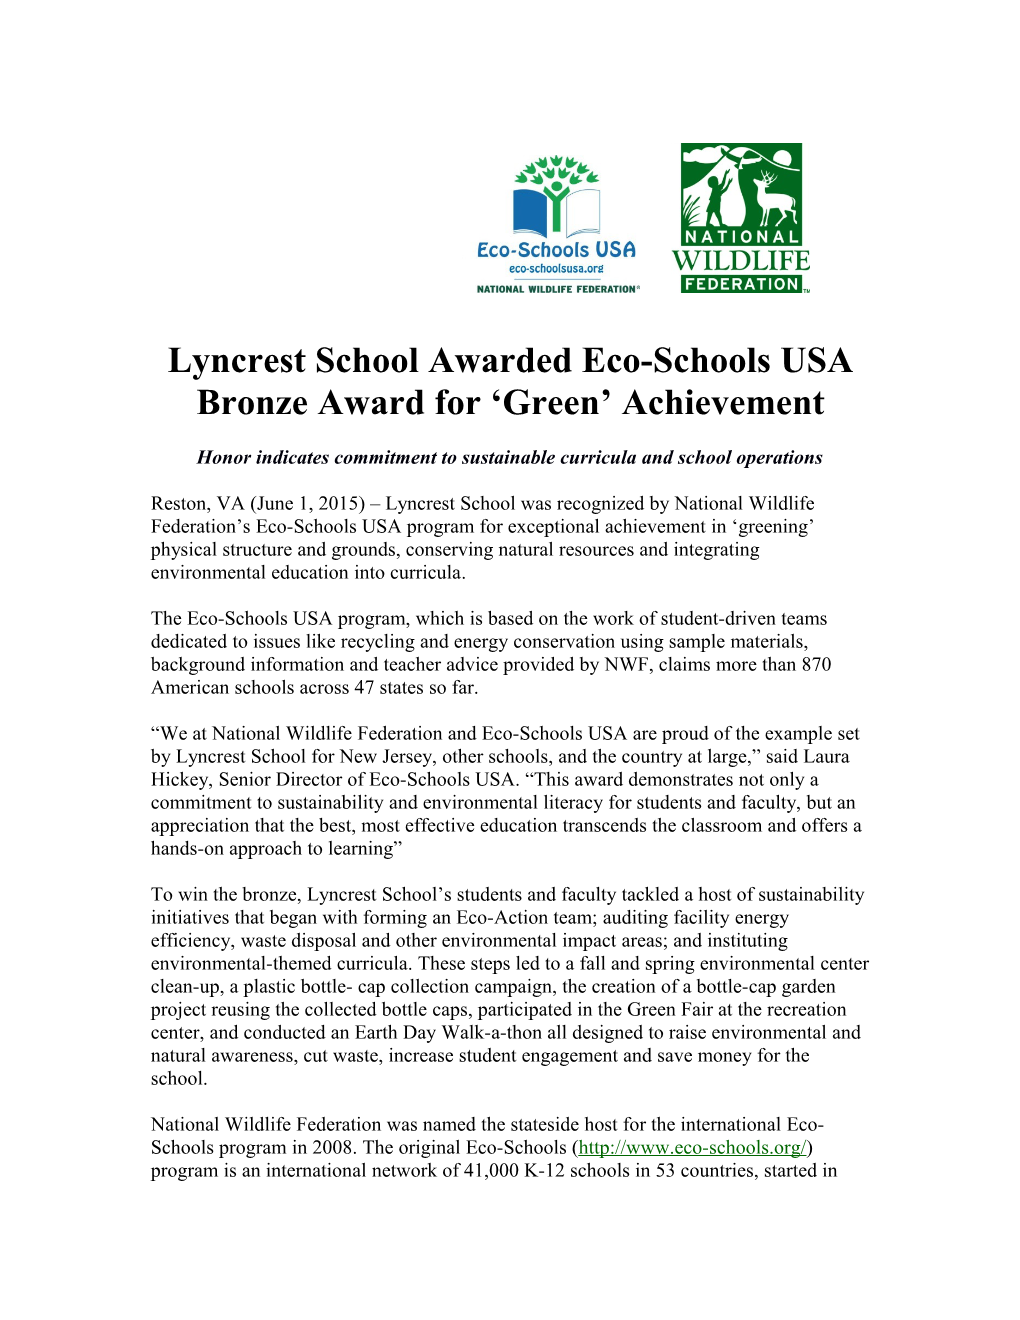 Lyncrest School Awarded Eco-Schools USA Bronze Award for Green Achievement